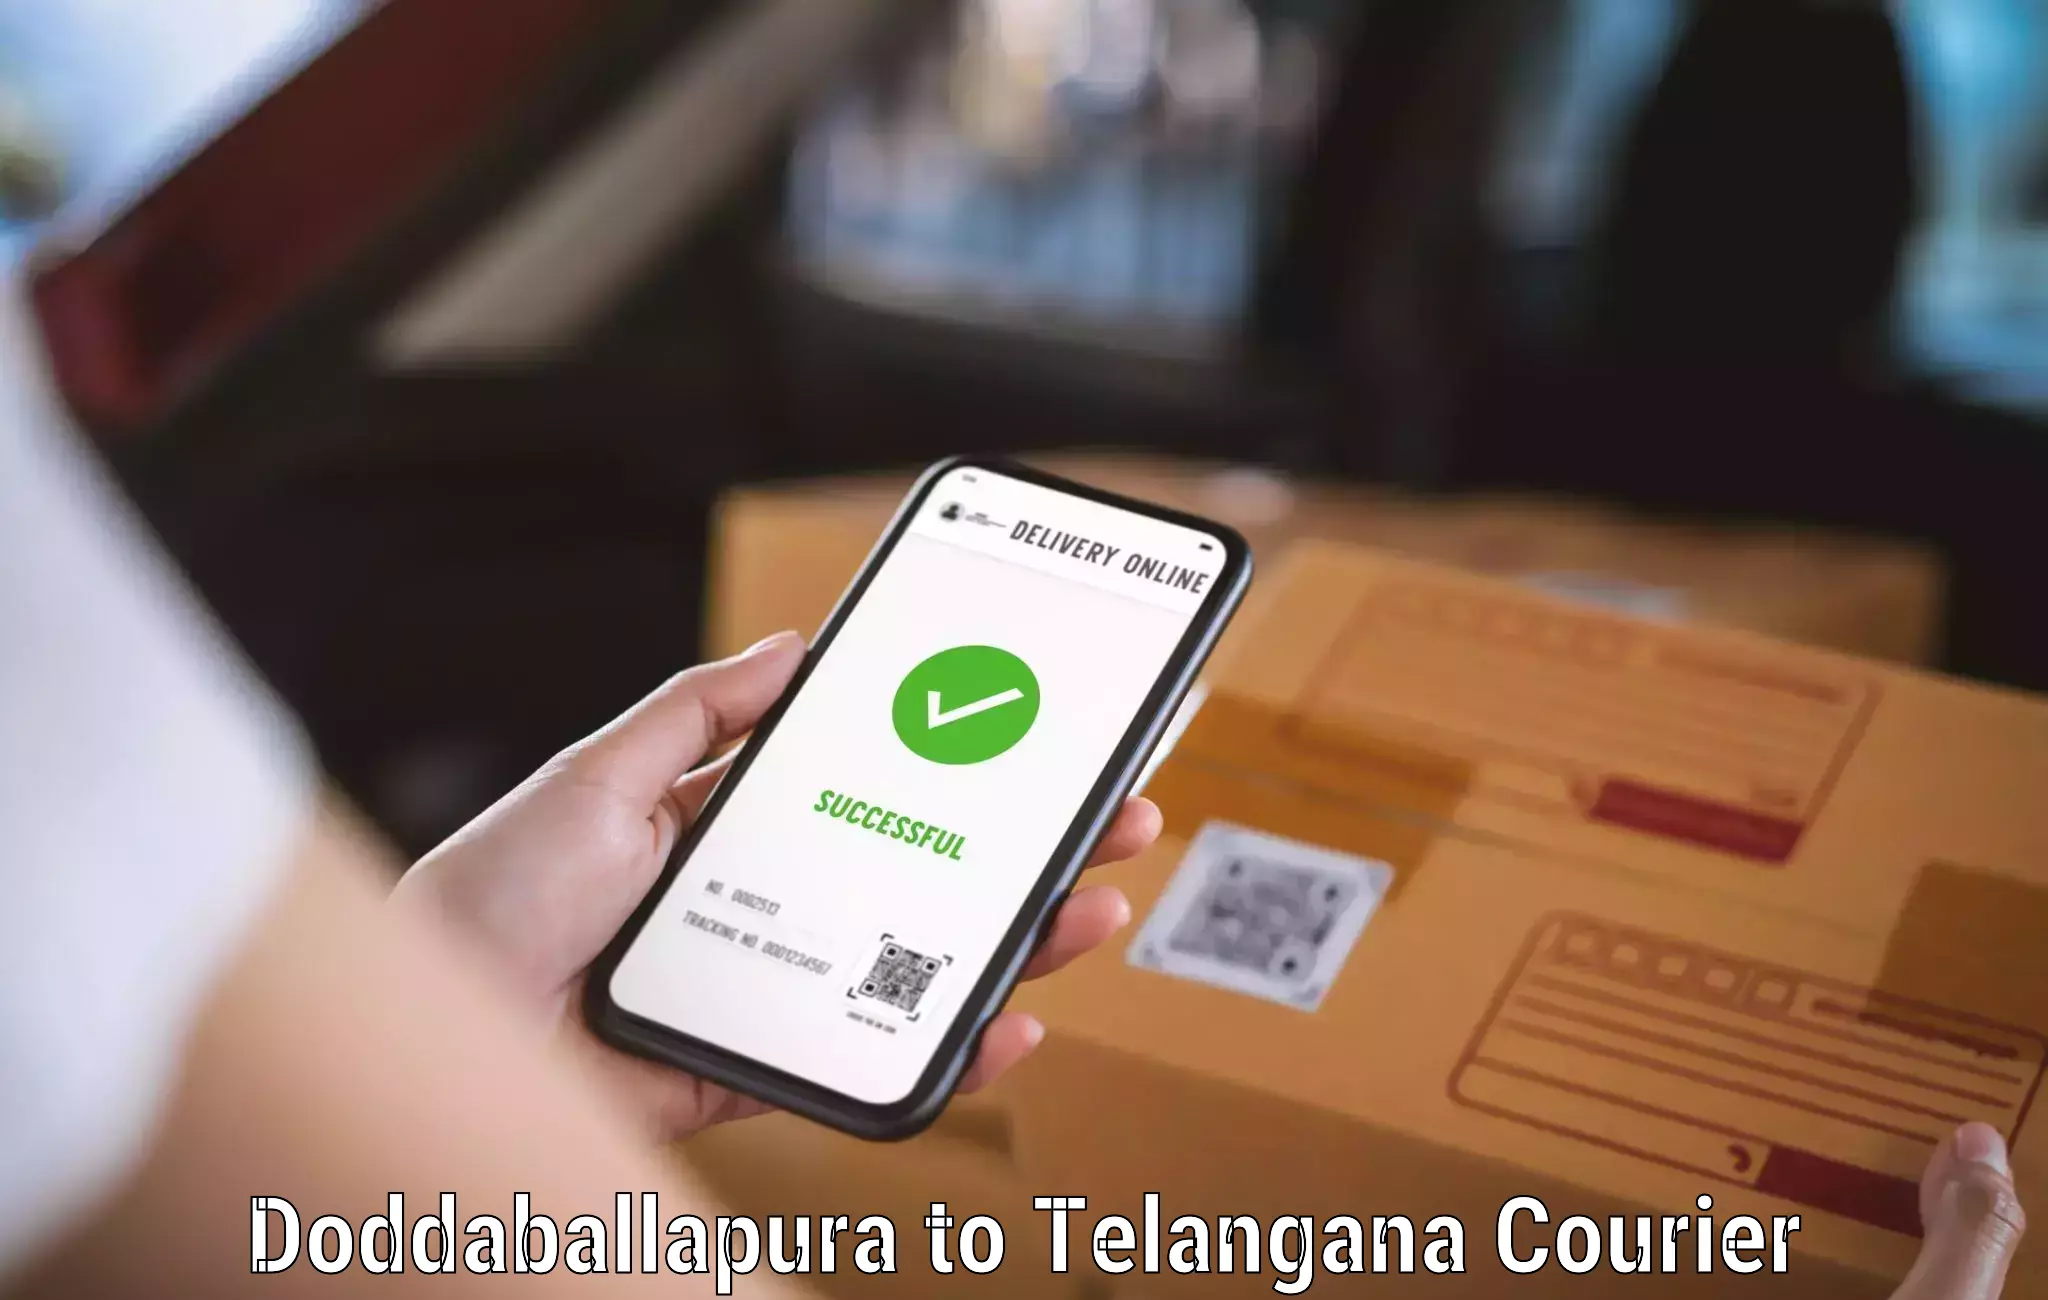 Express delivery capabilities Doddaballapura to Mothkur